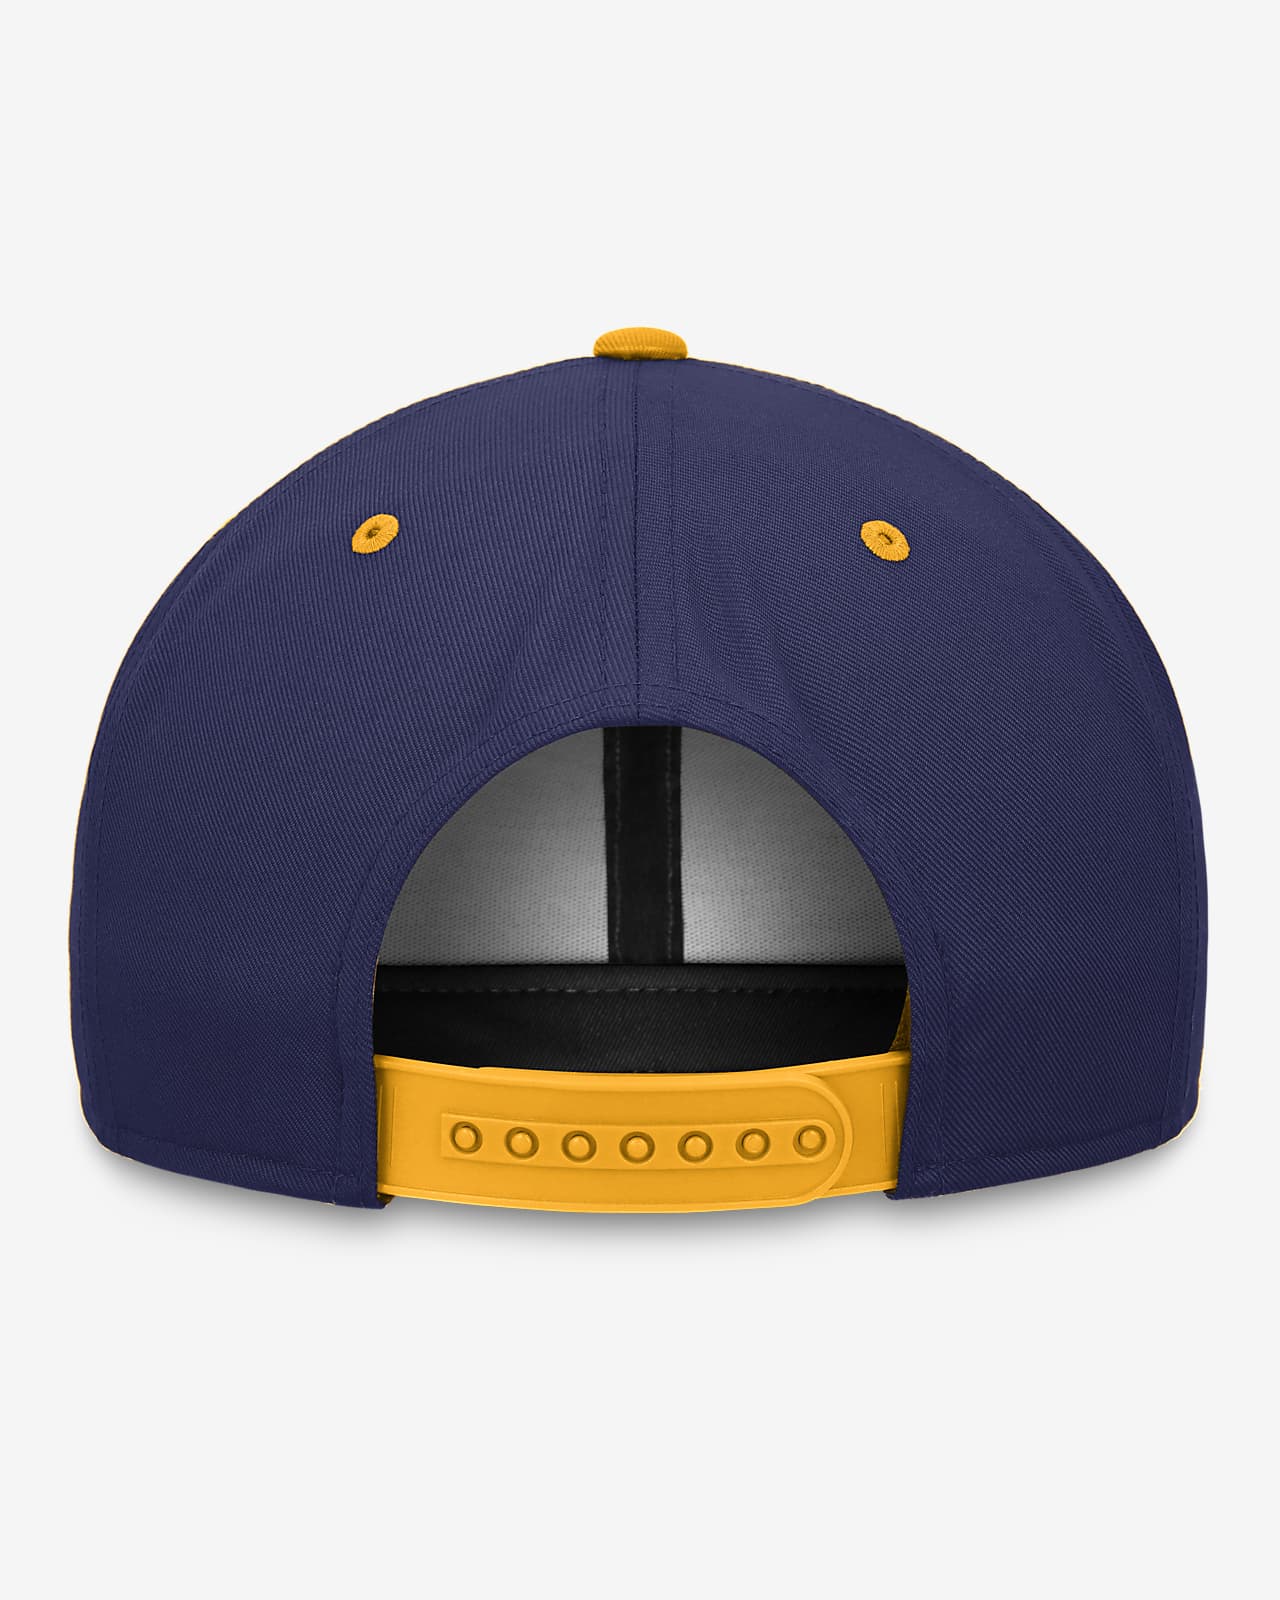 Seattle Mariners Cooperstown Snapback Adjustable Hat